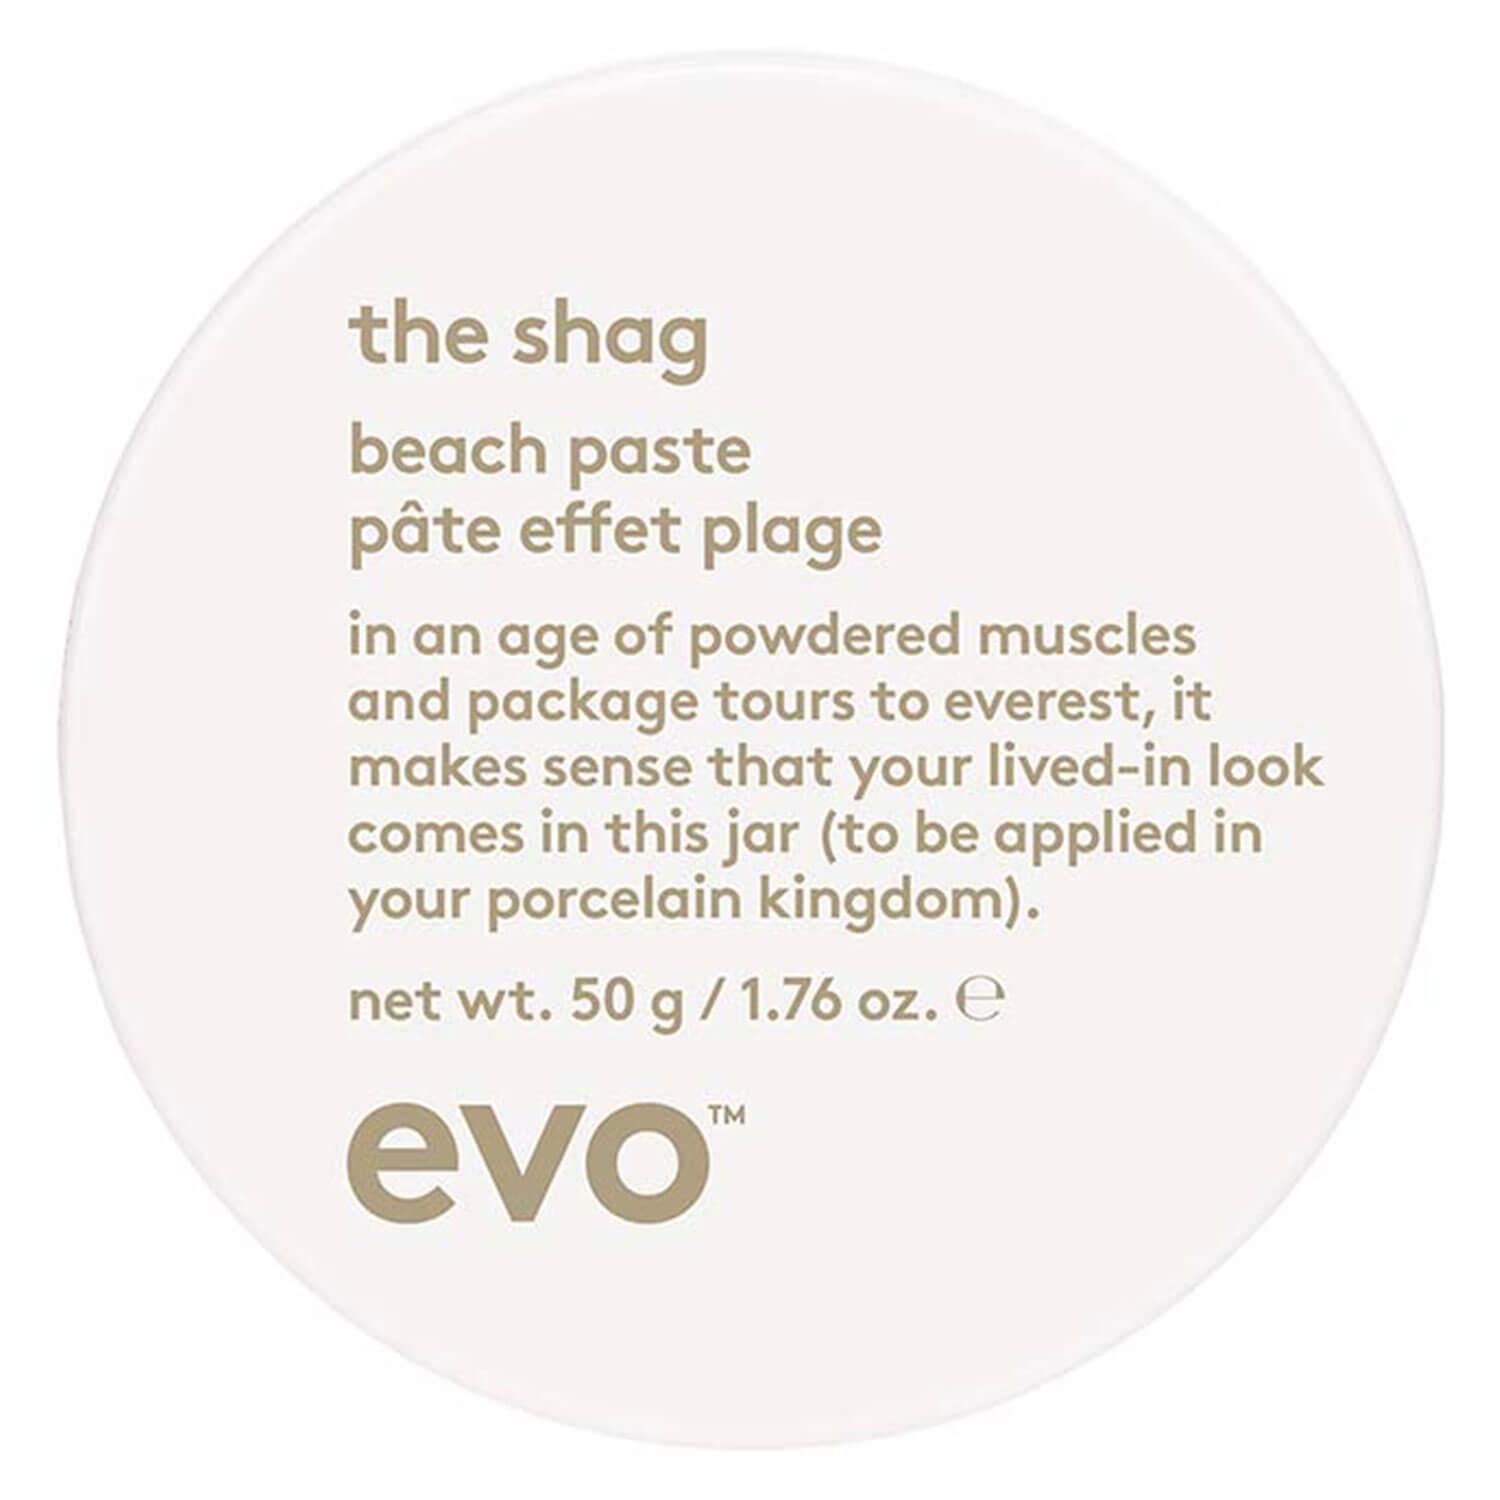 evo style - the shag beach paste